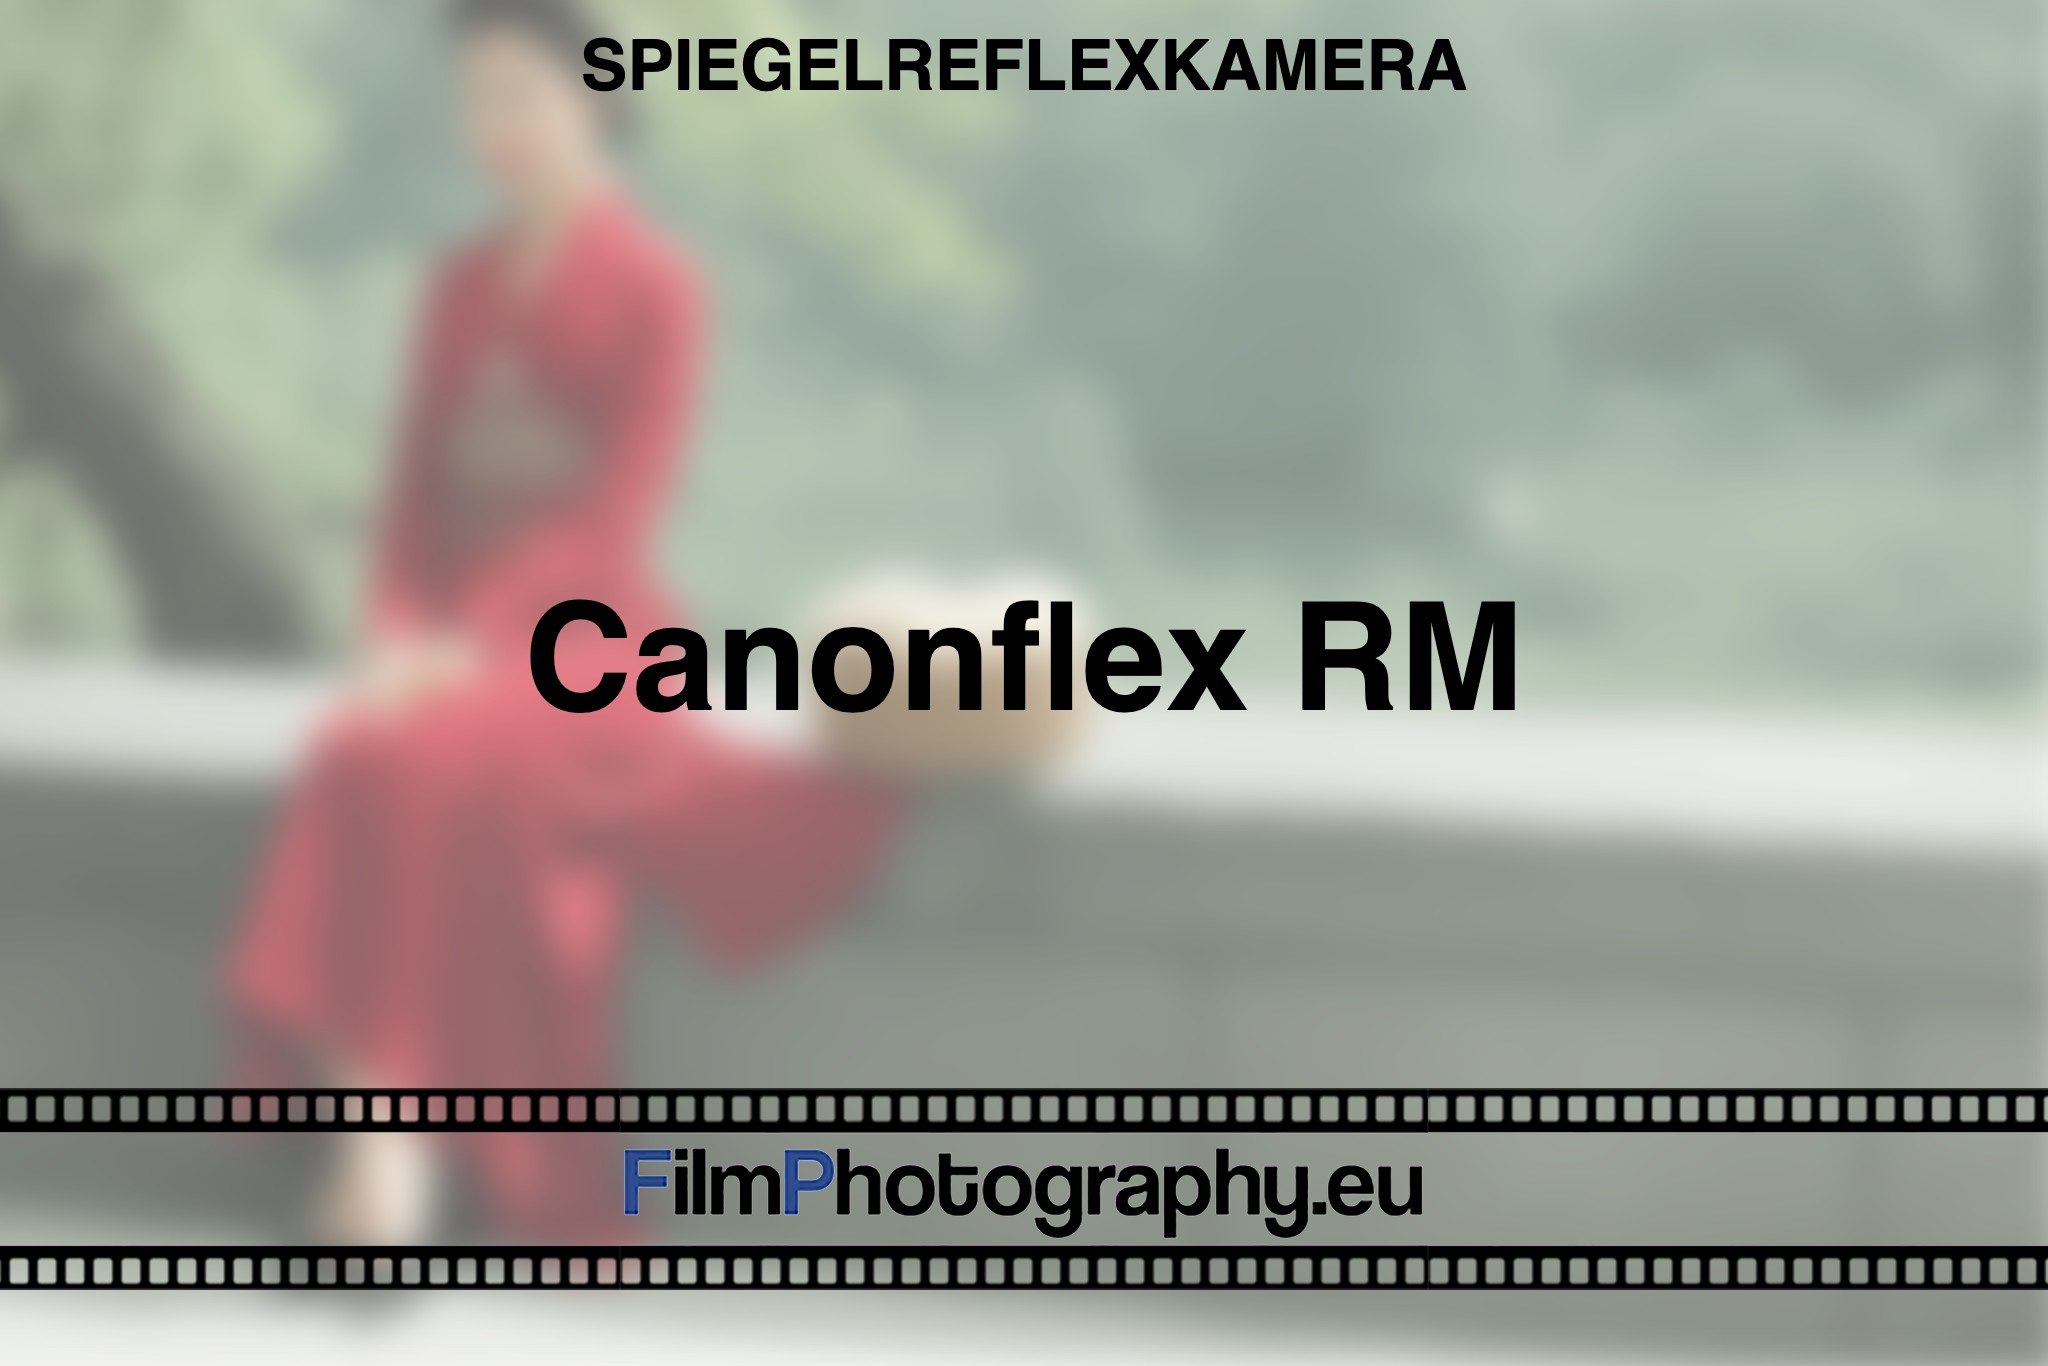 canonflex-rm-spiegelreflexkamera-bnv